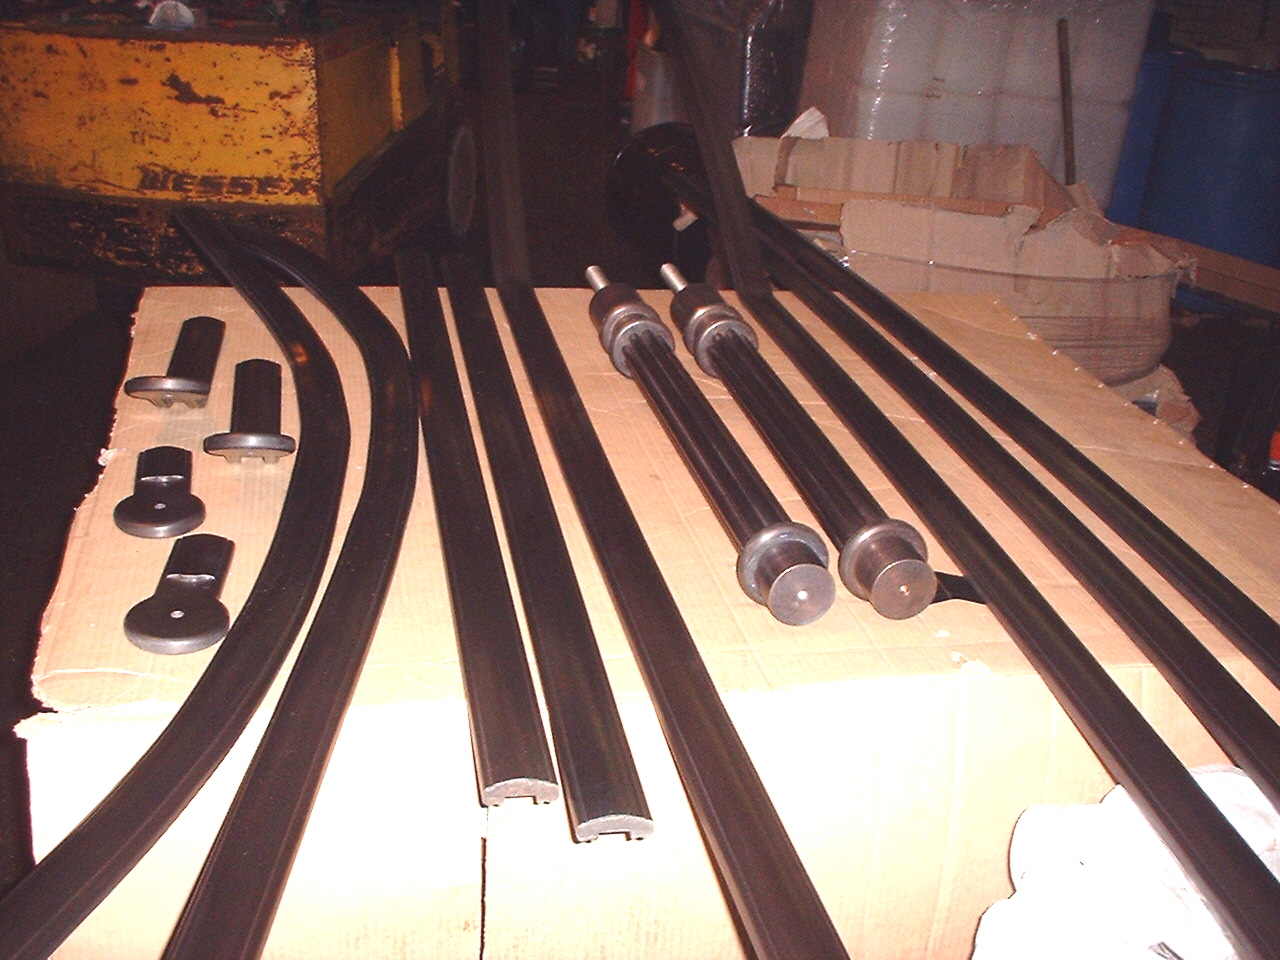 Bespoke handrail components.
Armatone CNG/F